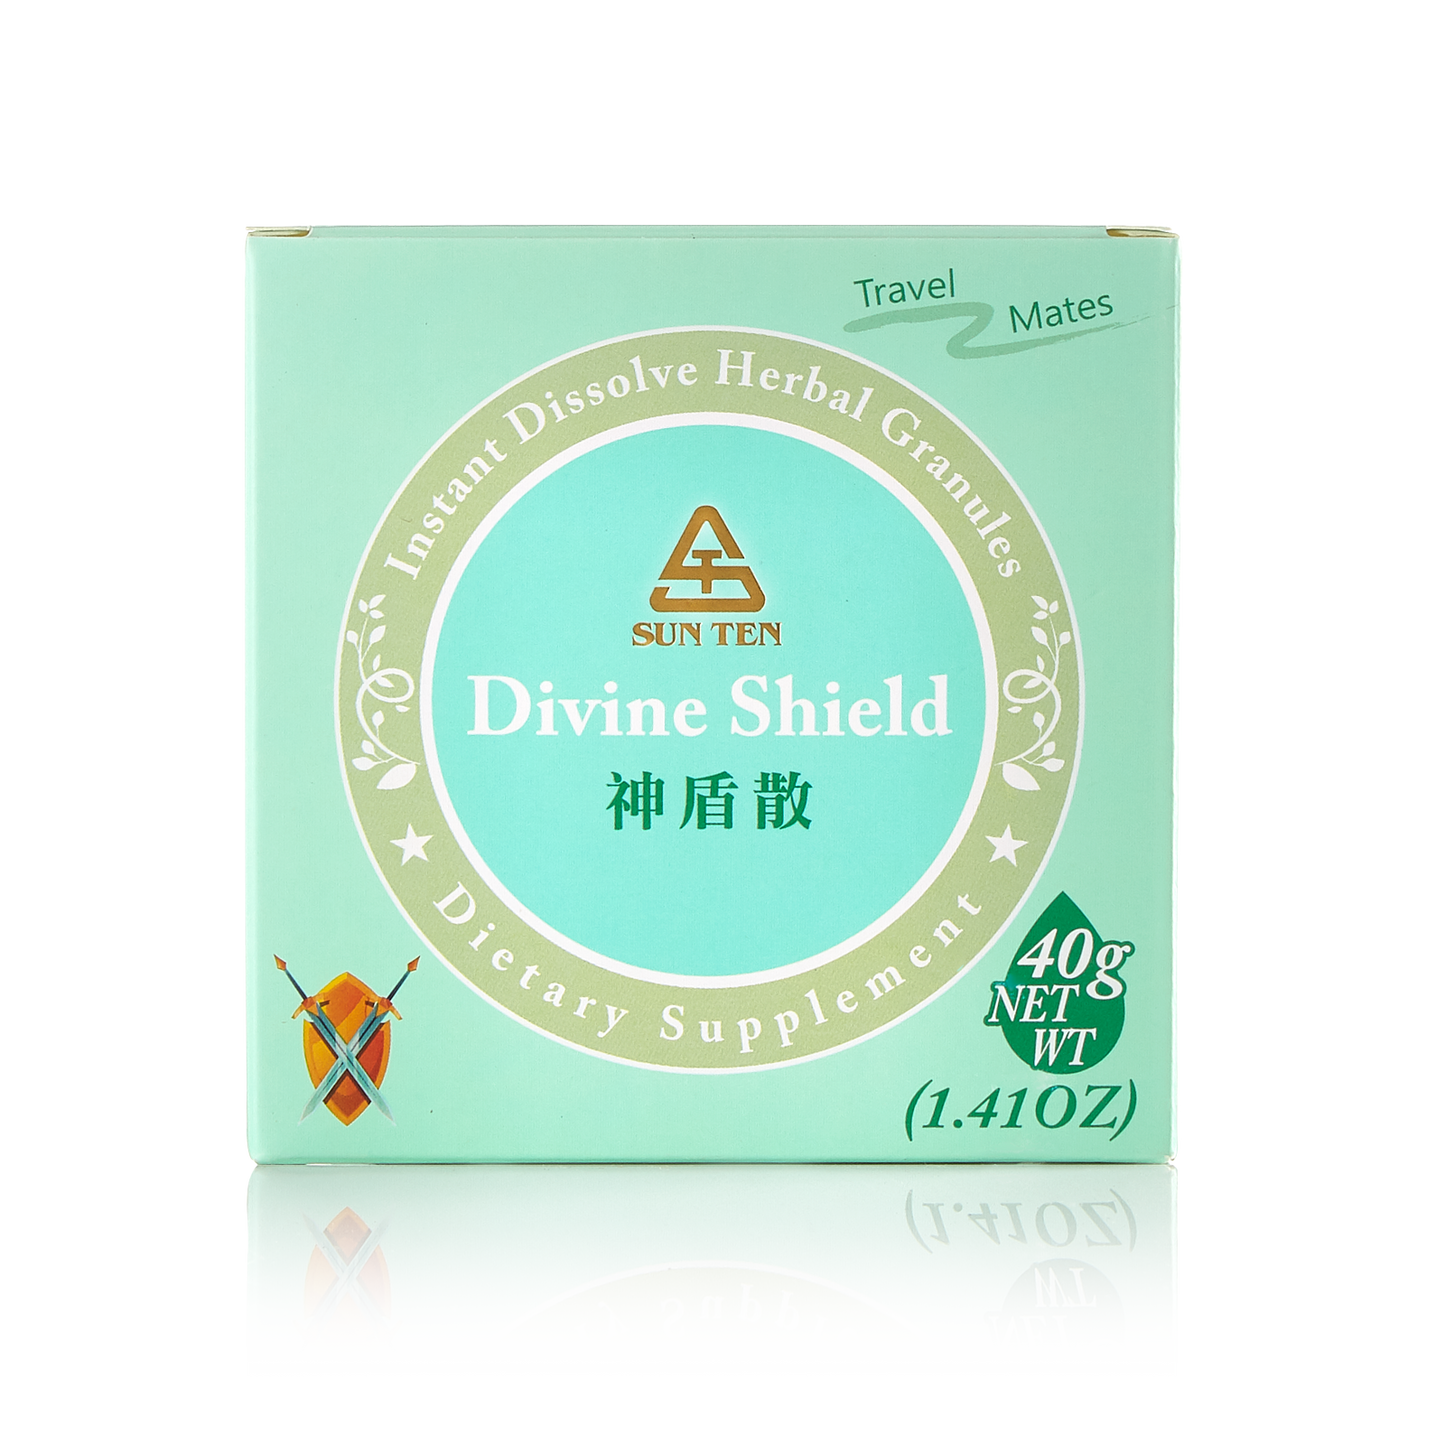 Divine Shield (Travel Mates)